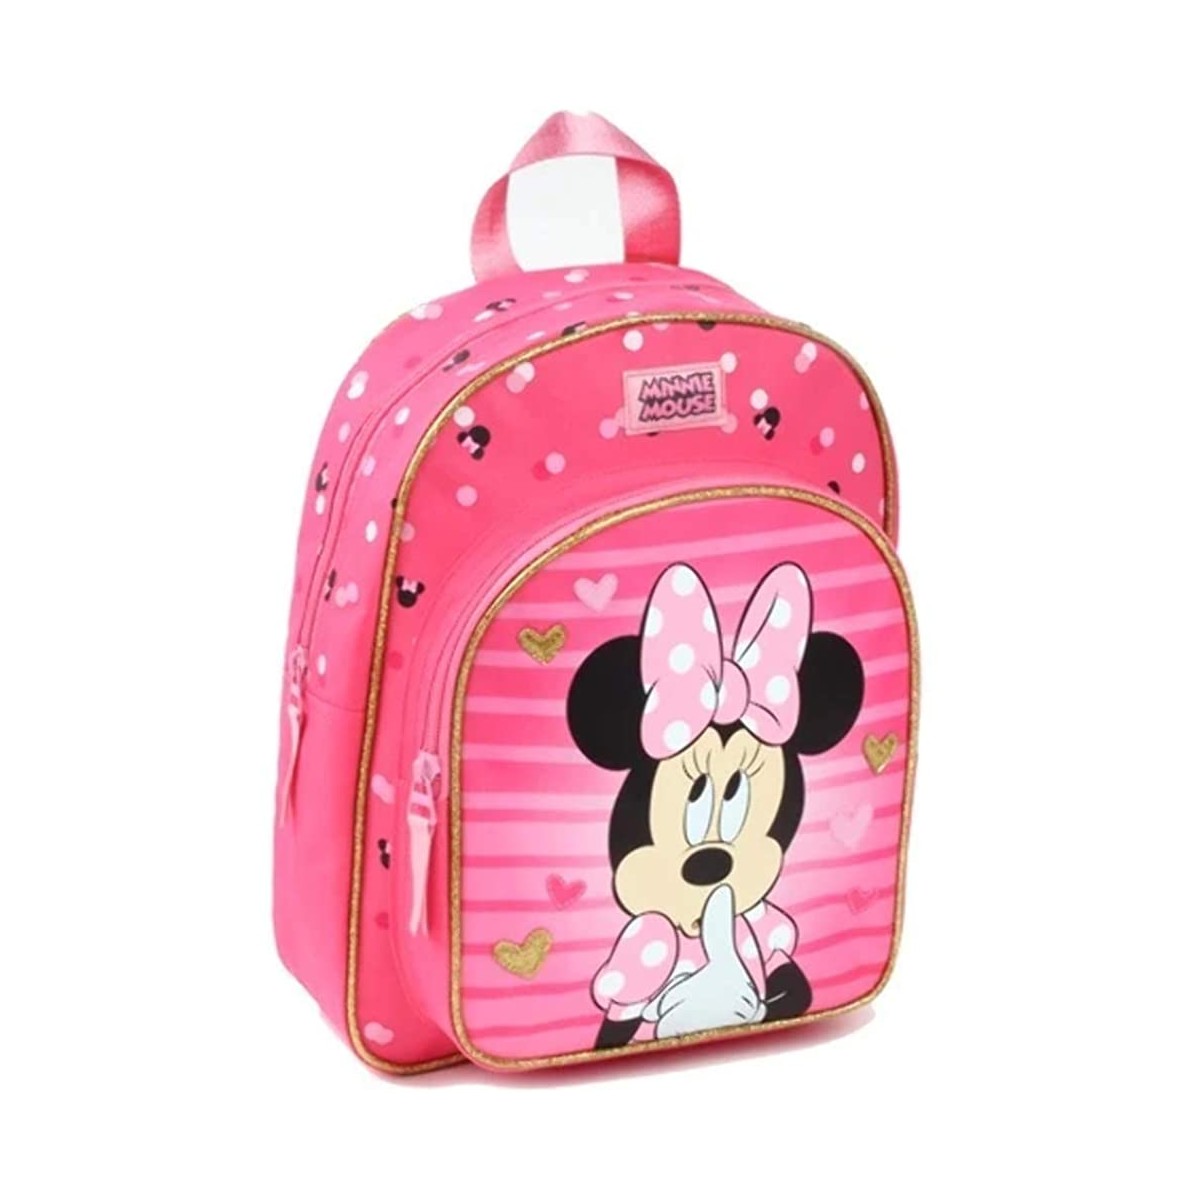 Zaino scuola Minnie Pink - Disney, comfort ottimale